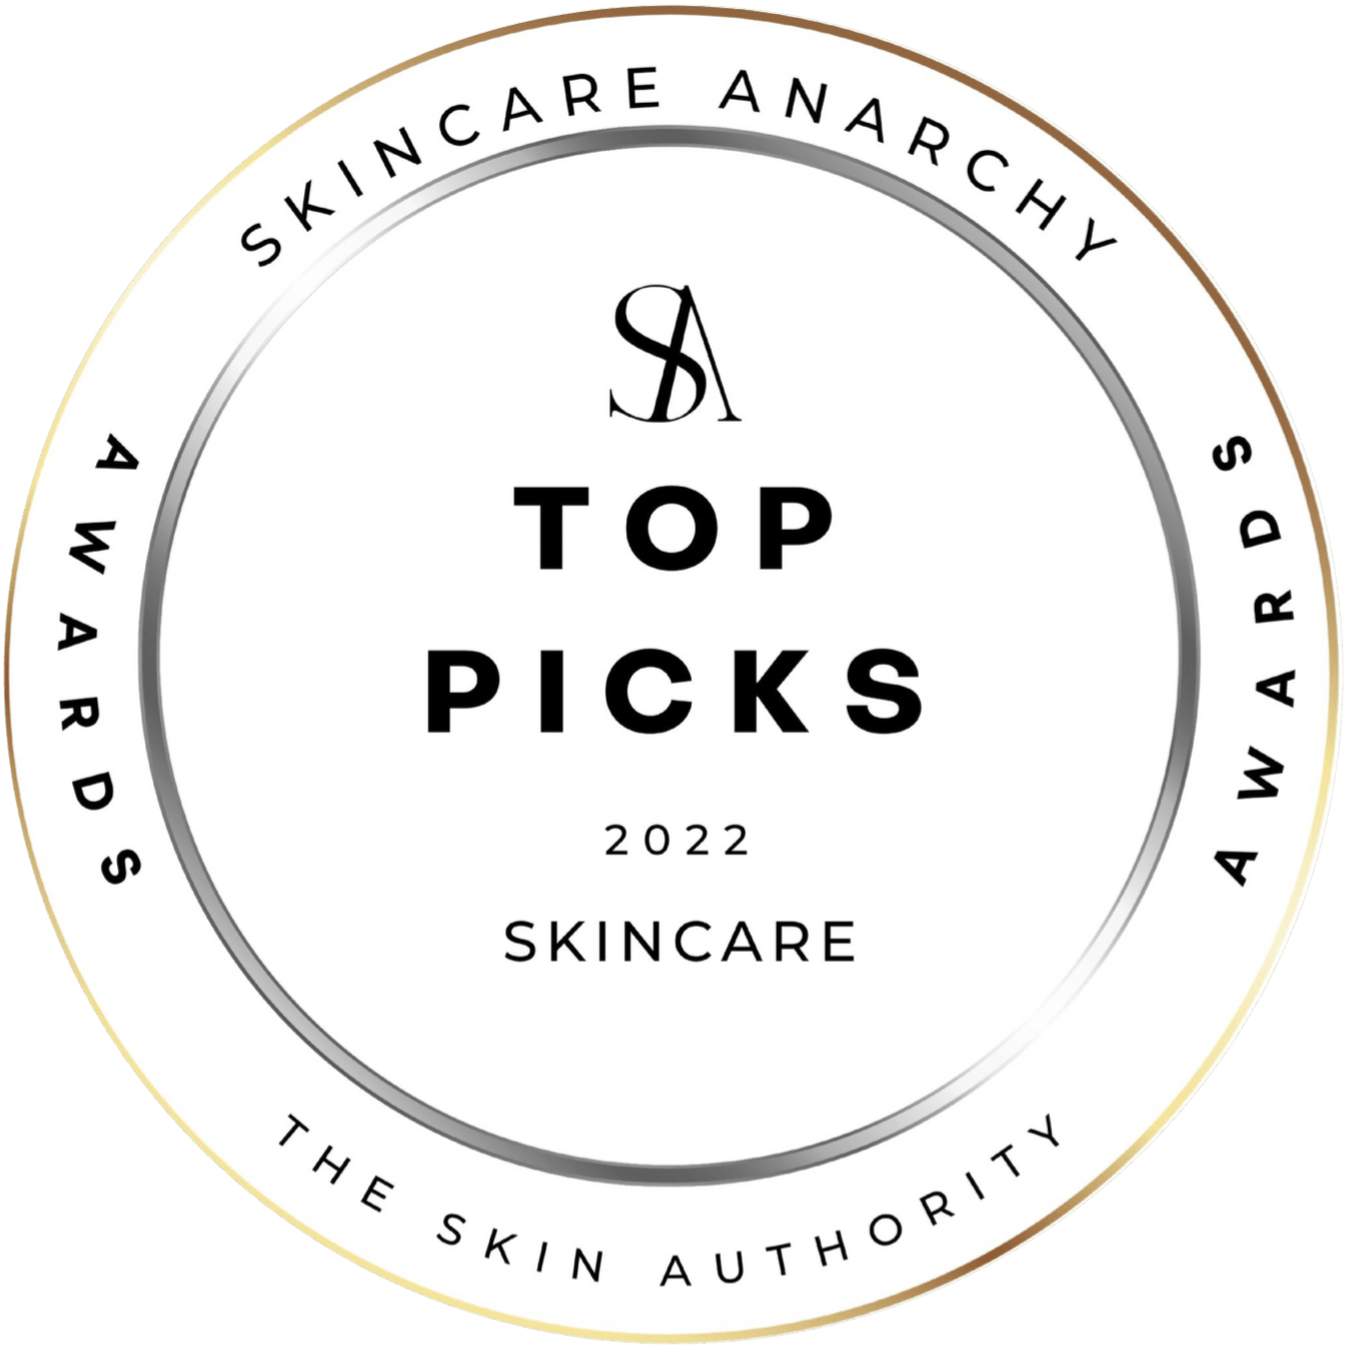 Skincare Anarchy’s Top Picks List 2022